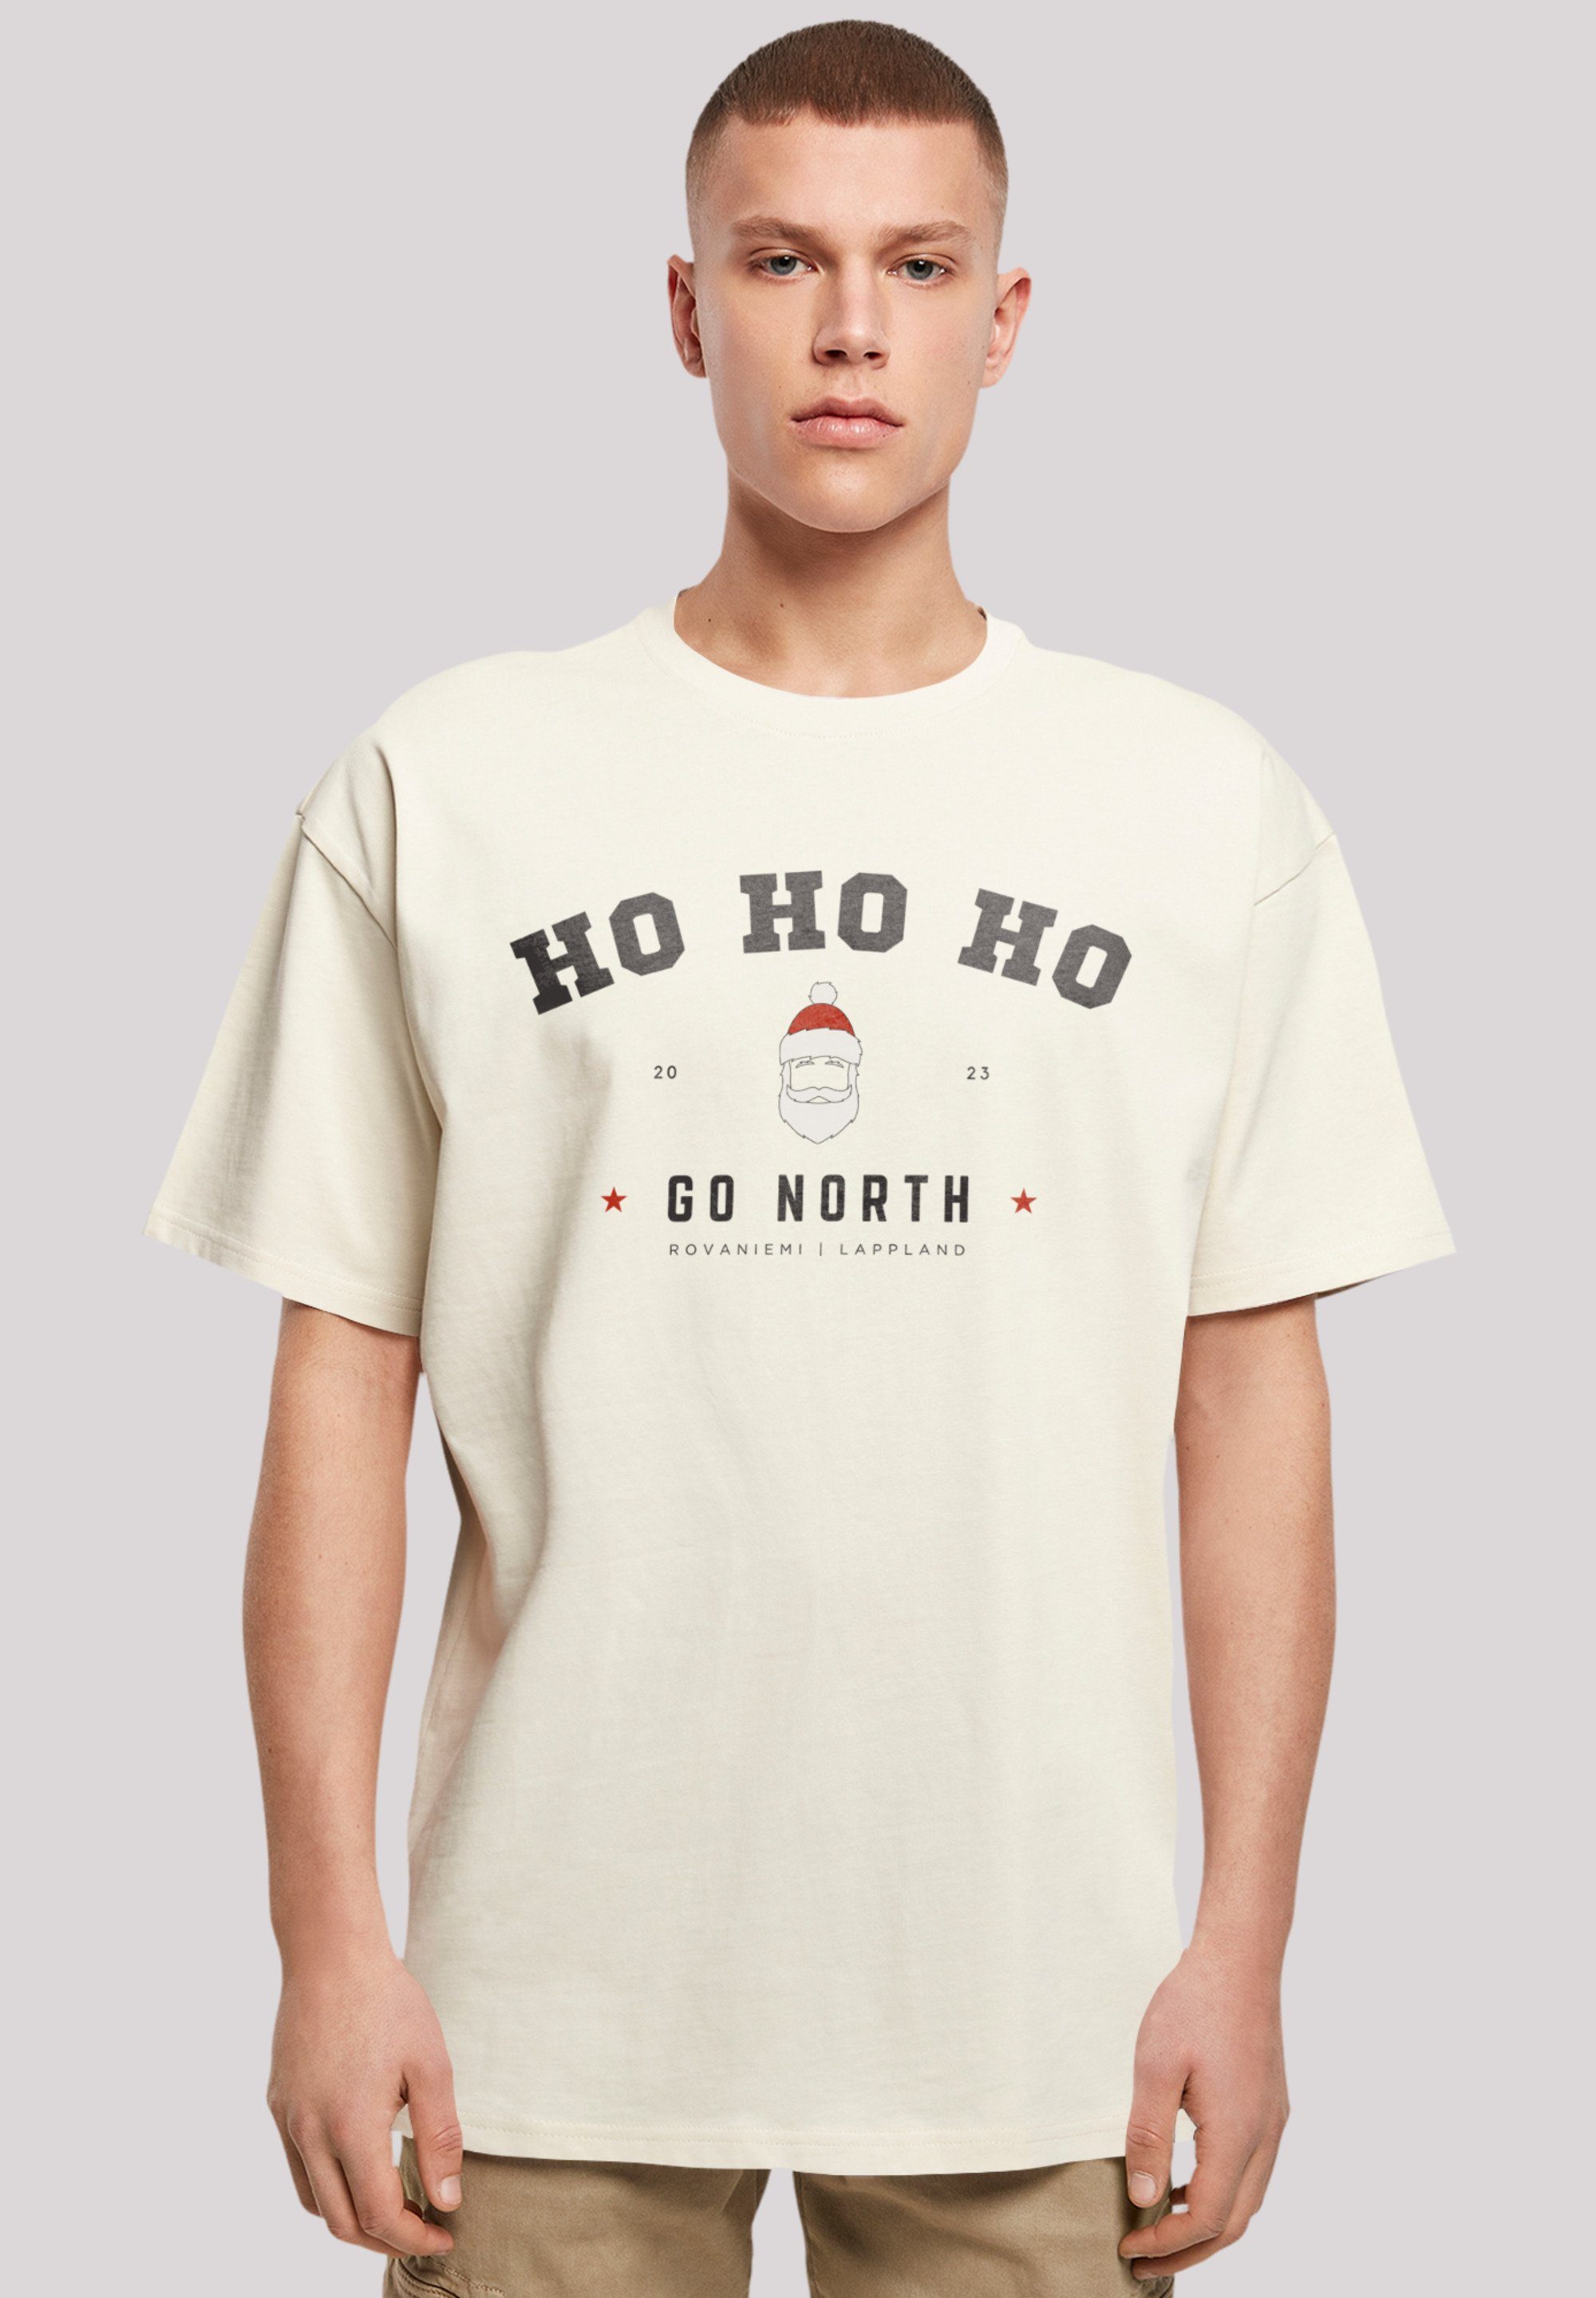 F4NT4STIC T-Shirt Ho Ho Weihnachten, Logo sand Geschenk, Weihnachten Ho Claus Santa